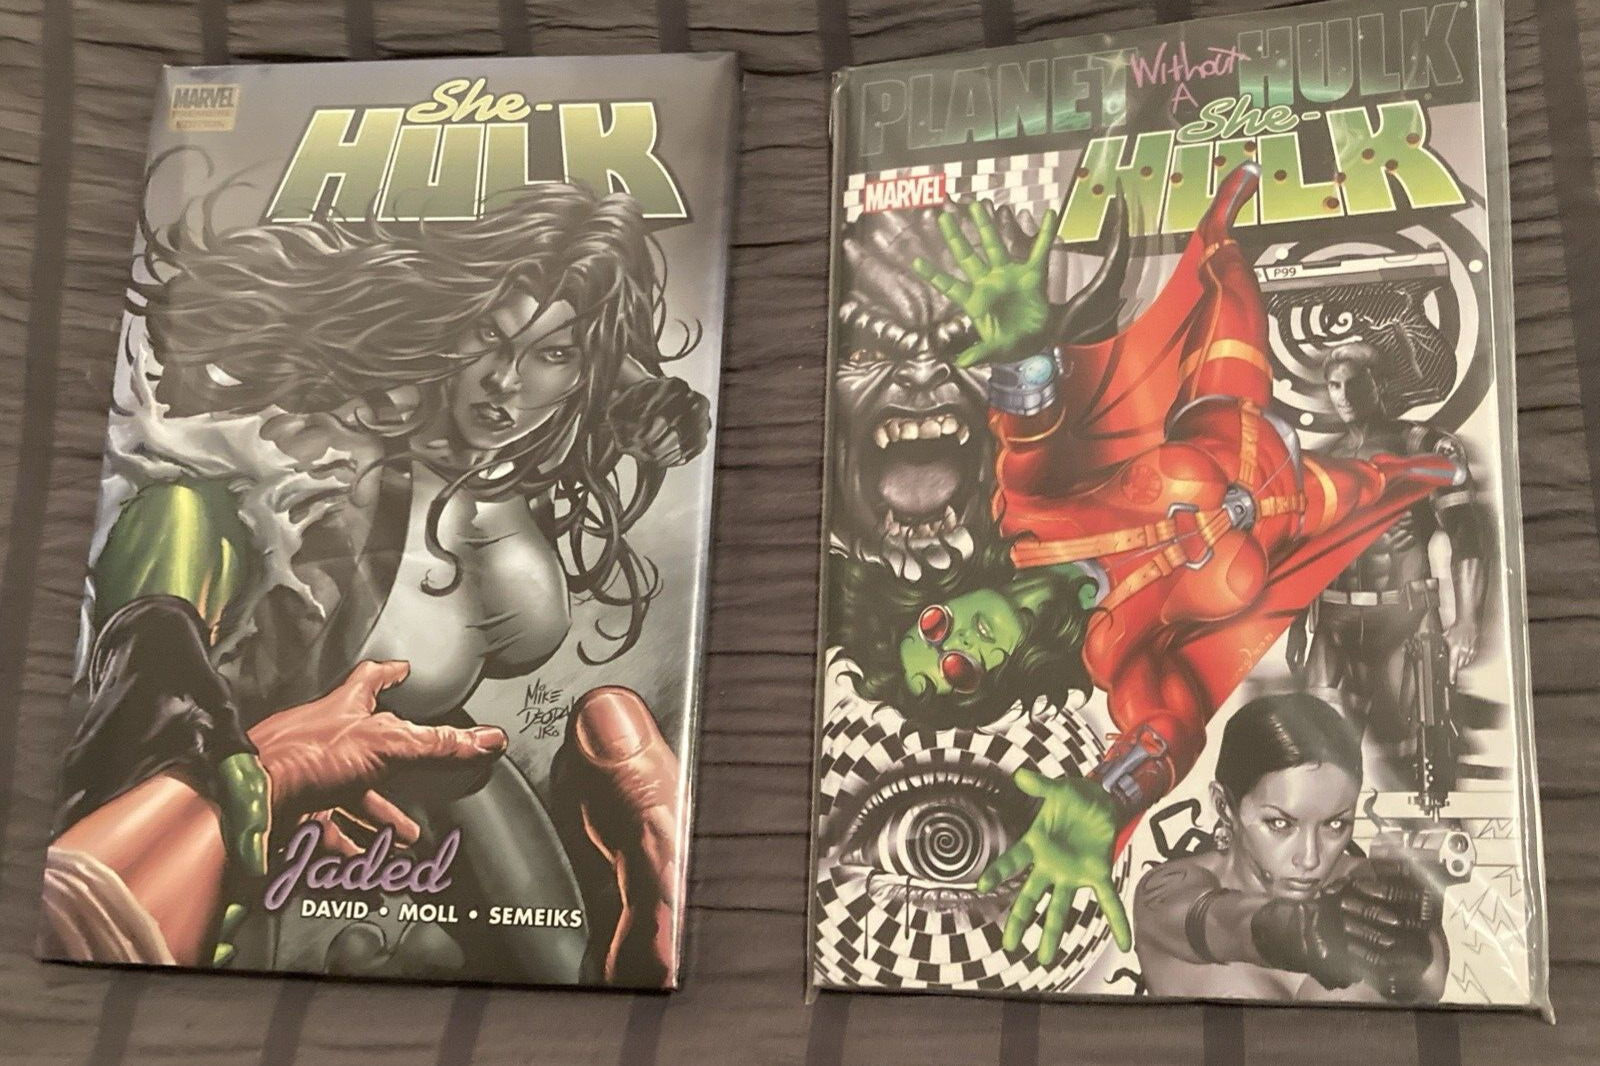 She-Hulk Hardcover Jaded Sealed & She-Hulk Vol 5 Planet Without A Hulk Lot